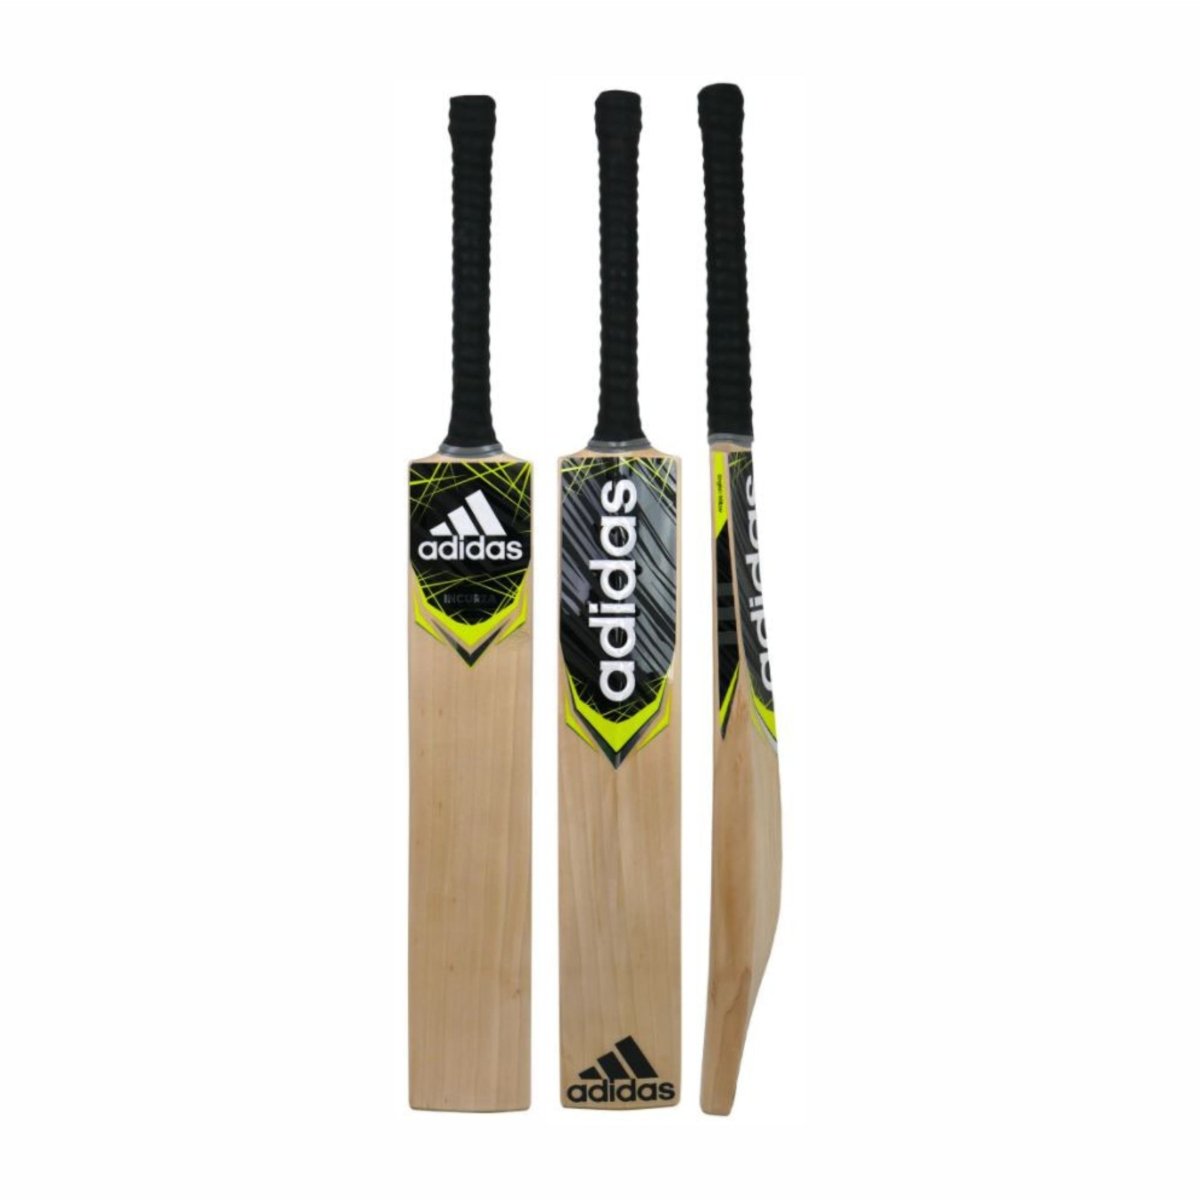 Adidas Incurza 6.0 Kashmir Willow Cricket Bat Size 6.